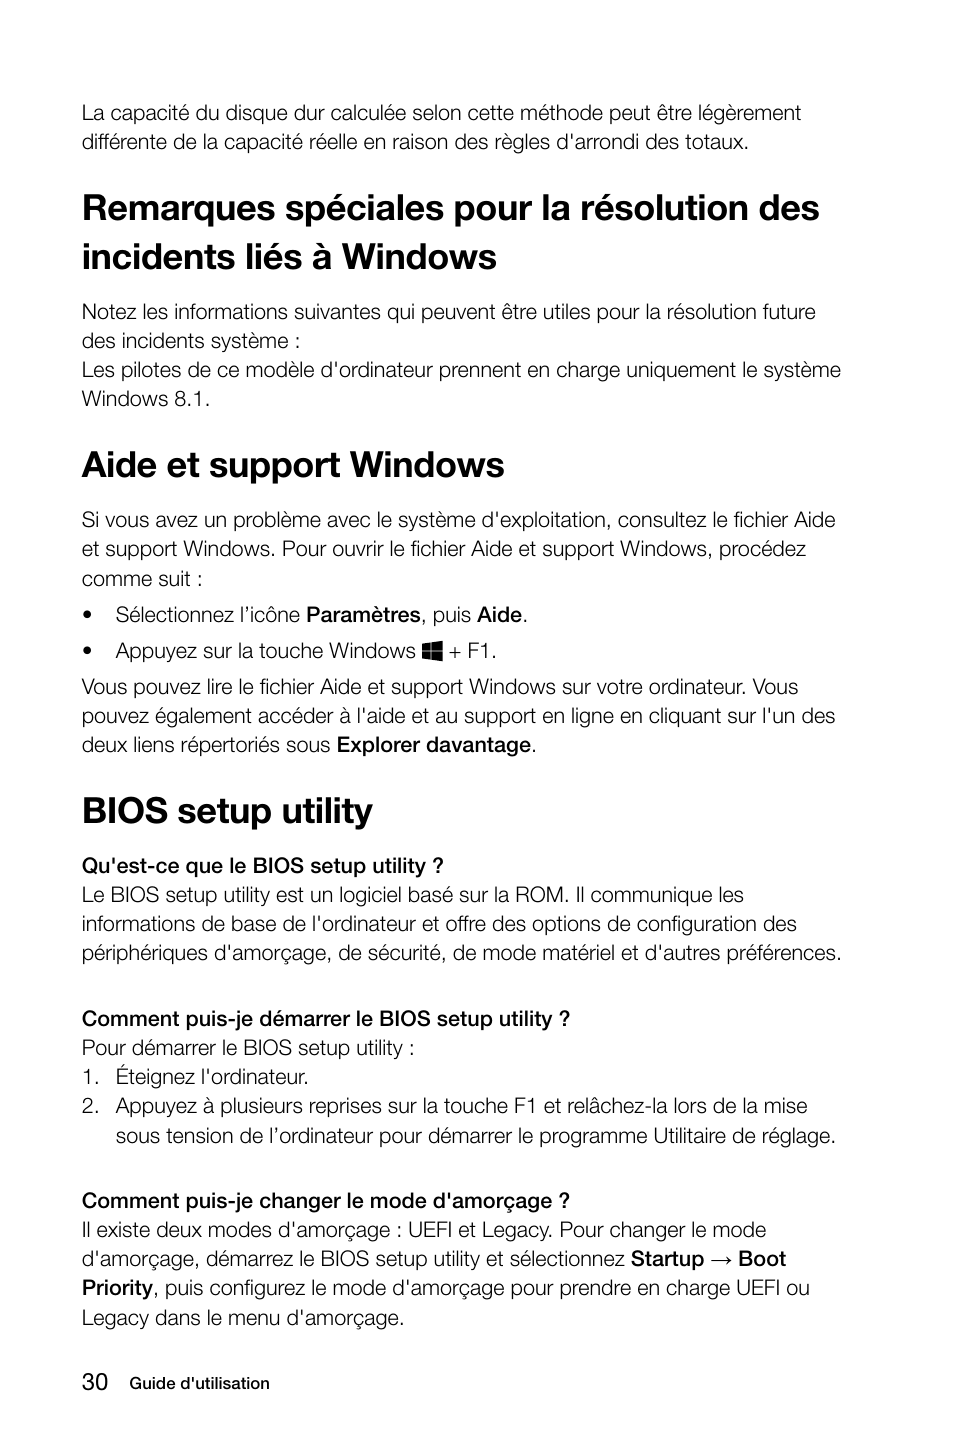 Aide et support windows, Bios setup utility | Lenovo H535 Desktop Manuel d'utilisation | Page 35 / 63